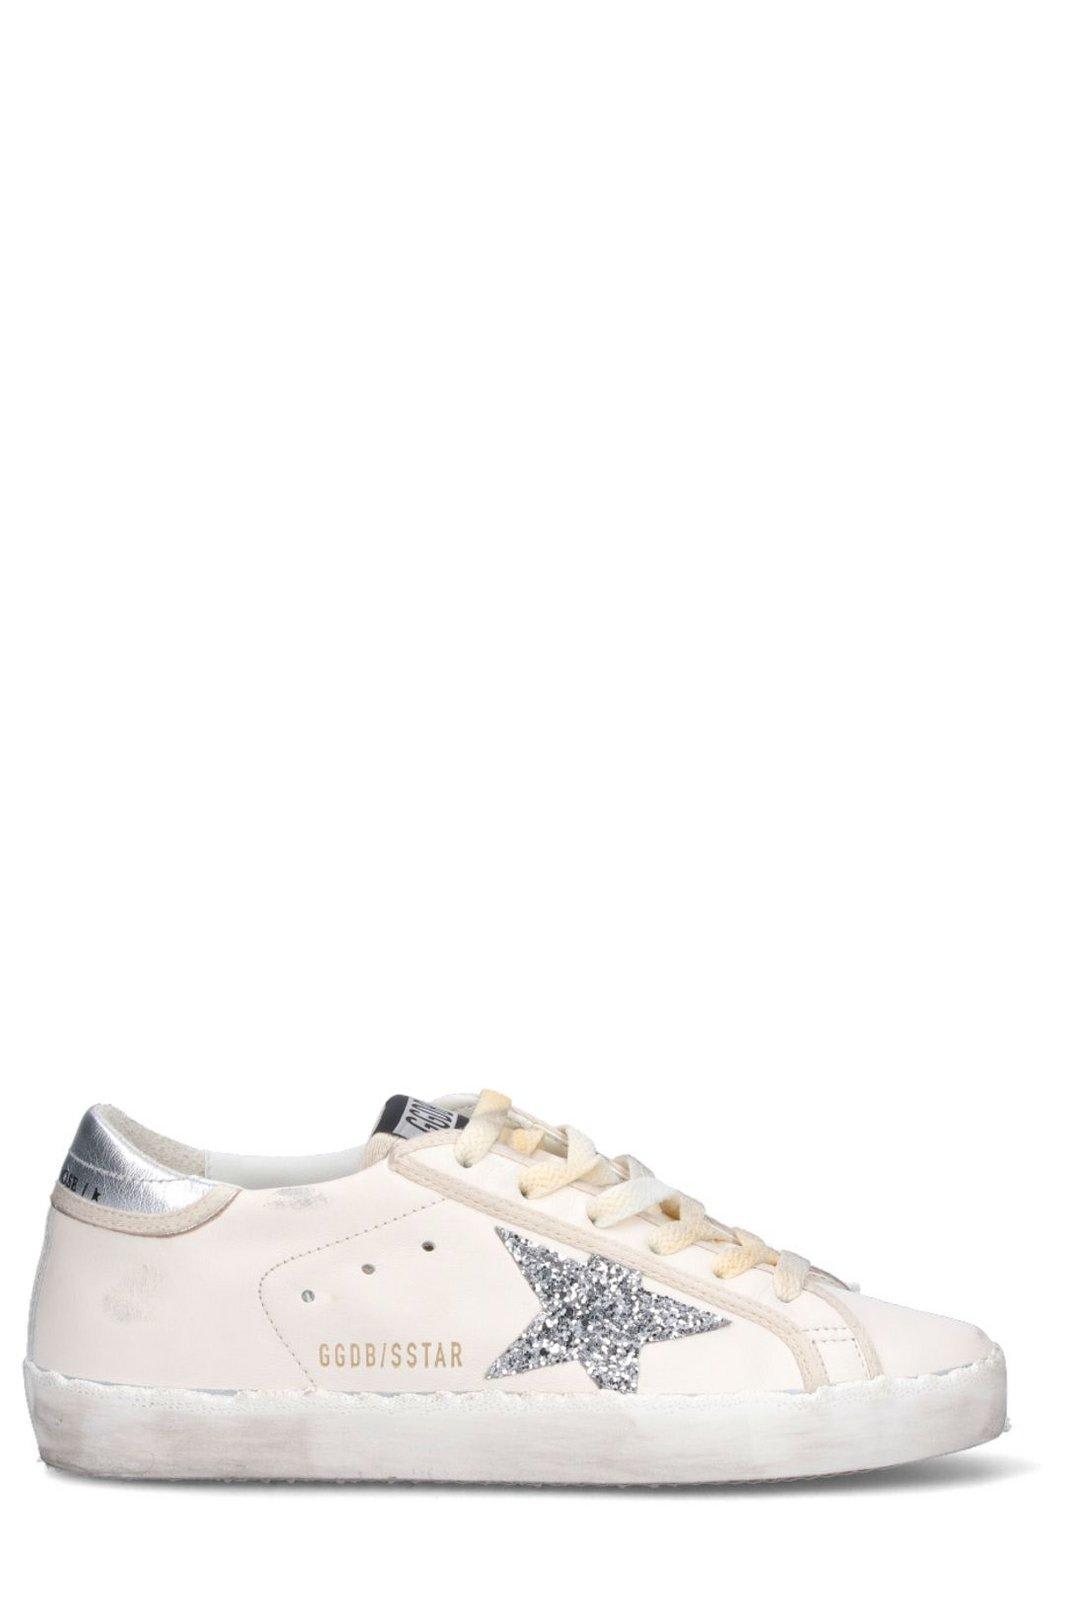 Golden Goose Super Star Glittered Sneakers In White/silver